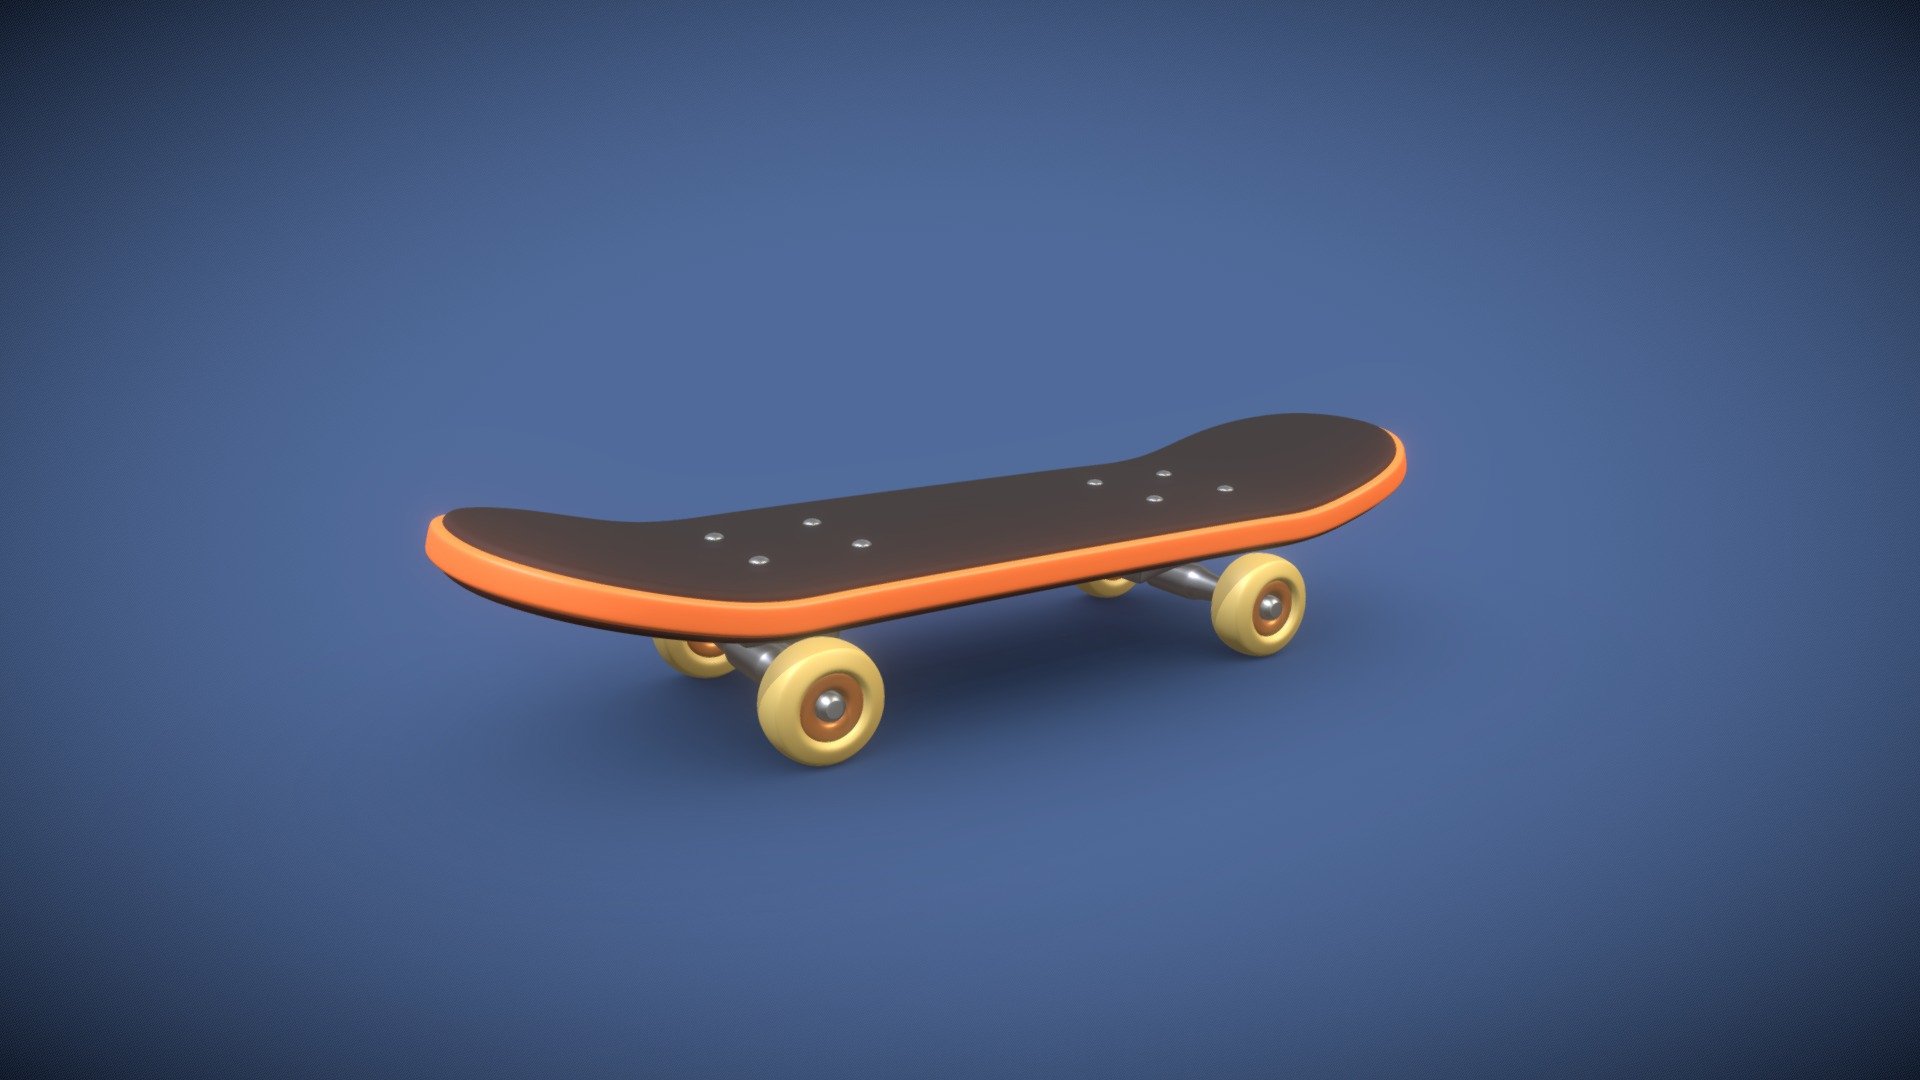 Cartoon skateboard
Polygons: 1969 
Vertices: 2053 - Cartoon skateboard - Buy Royalty Free 3D model by Bas Jansen (@basjansen) 3d model